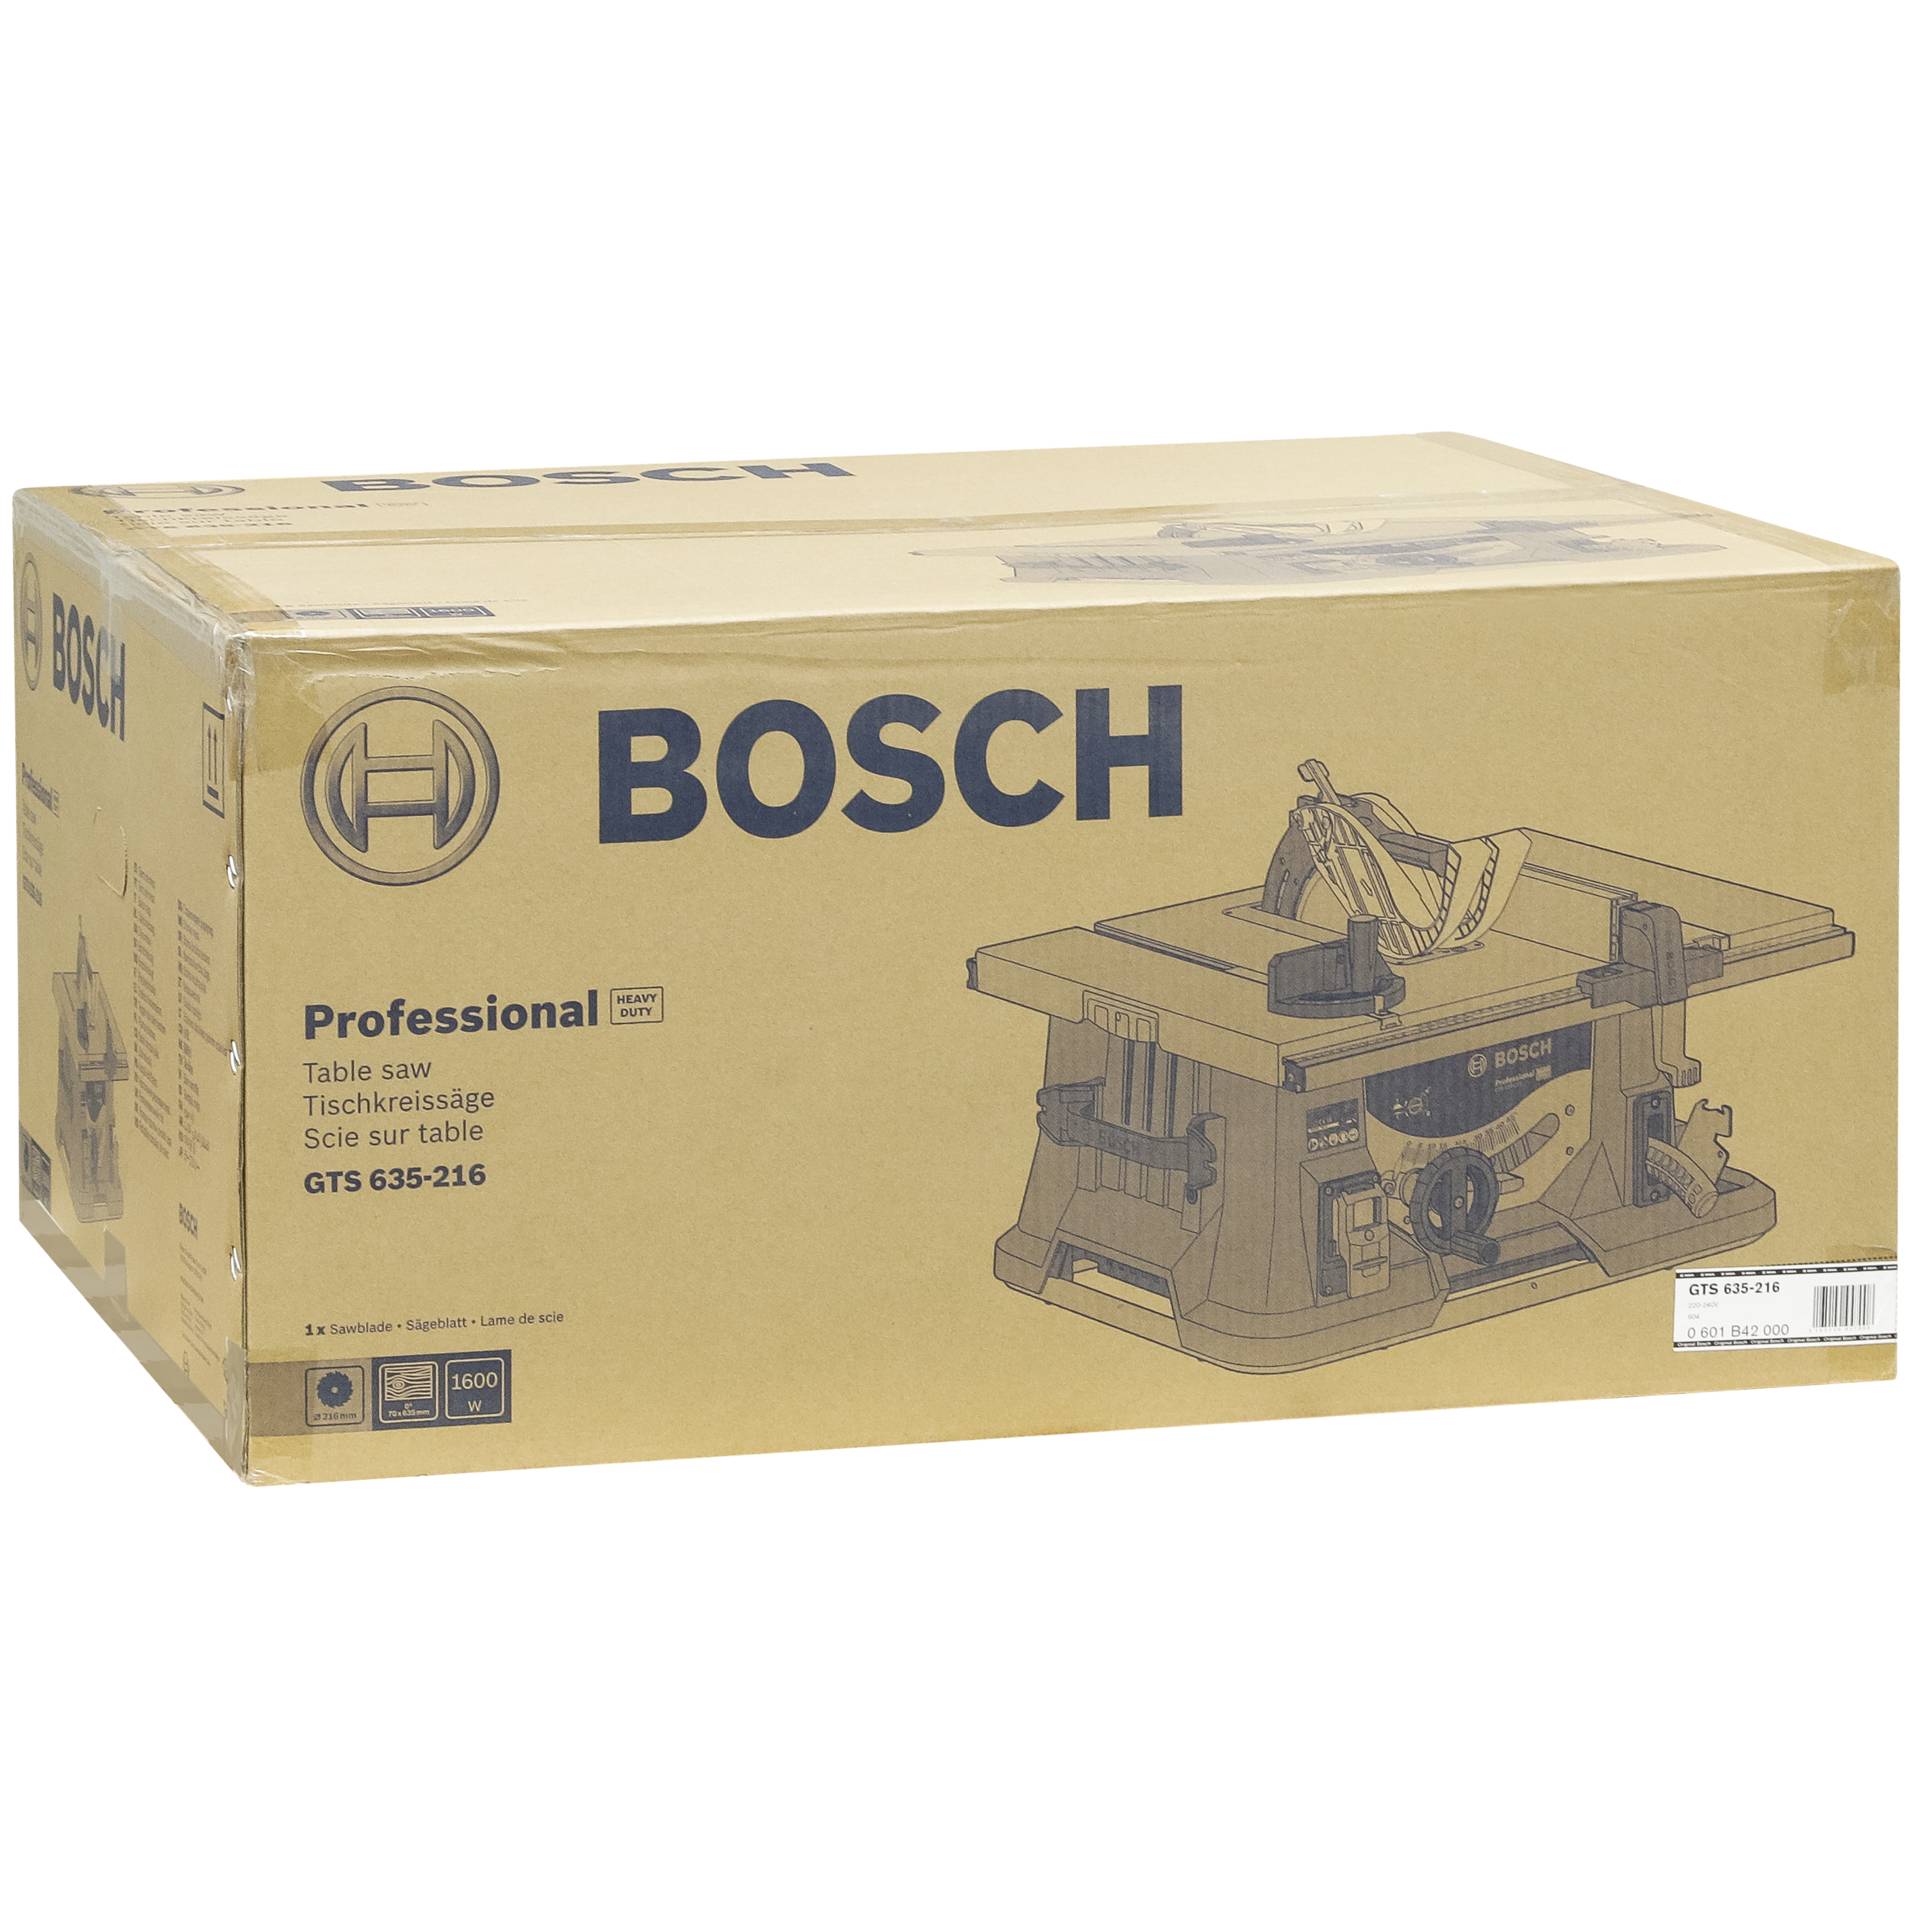 Banco Sega Bosch GTS GTS 635-216 Professional